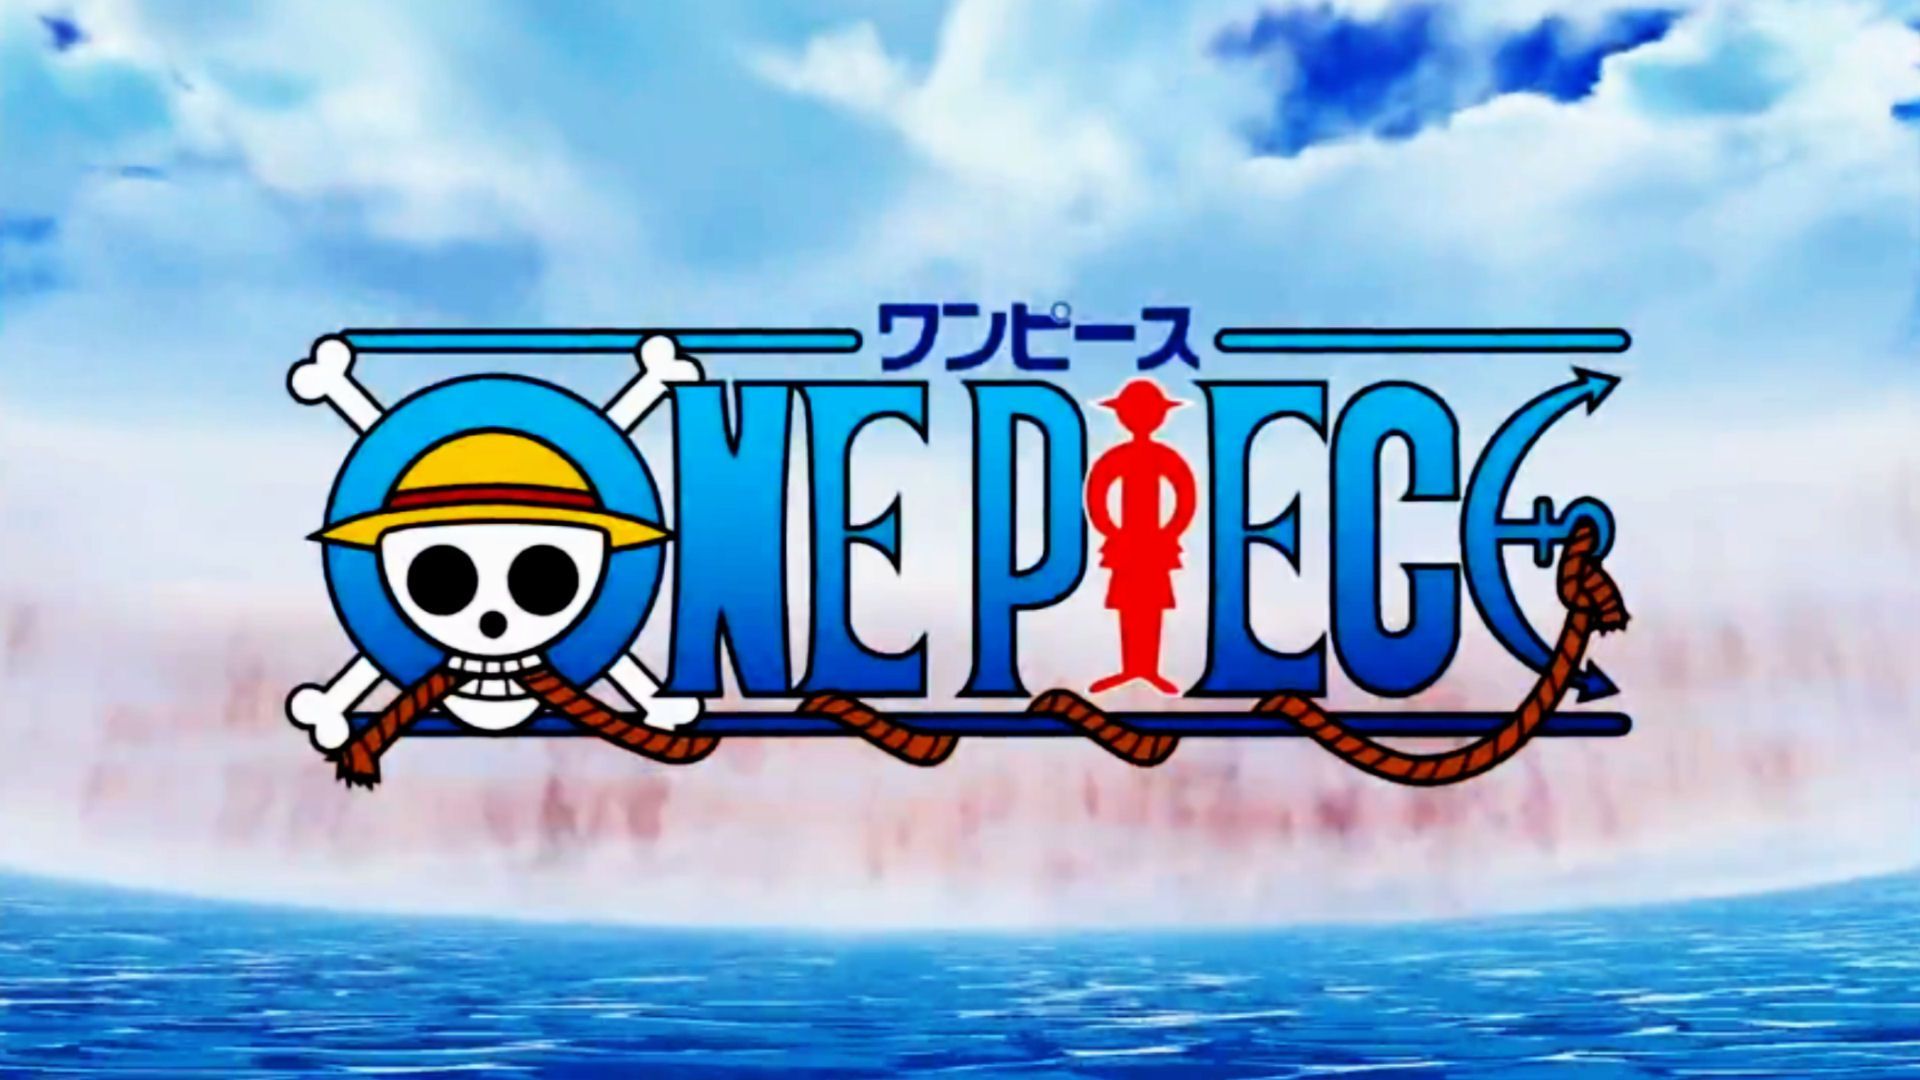 One Piece Hd Wallpapers | Free HD Desktop Wallpapers - Widescreen ...